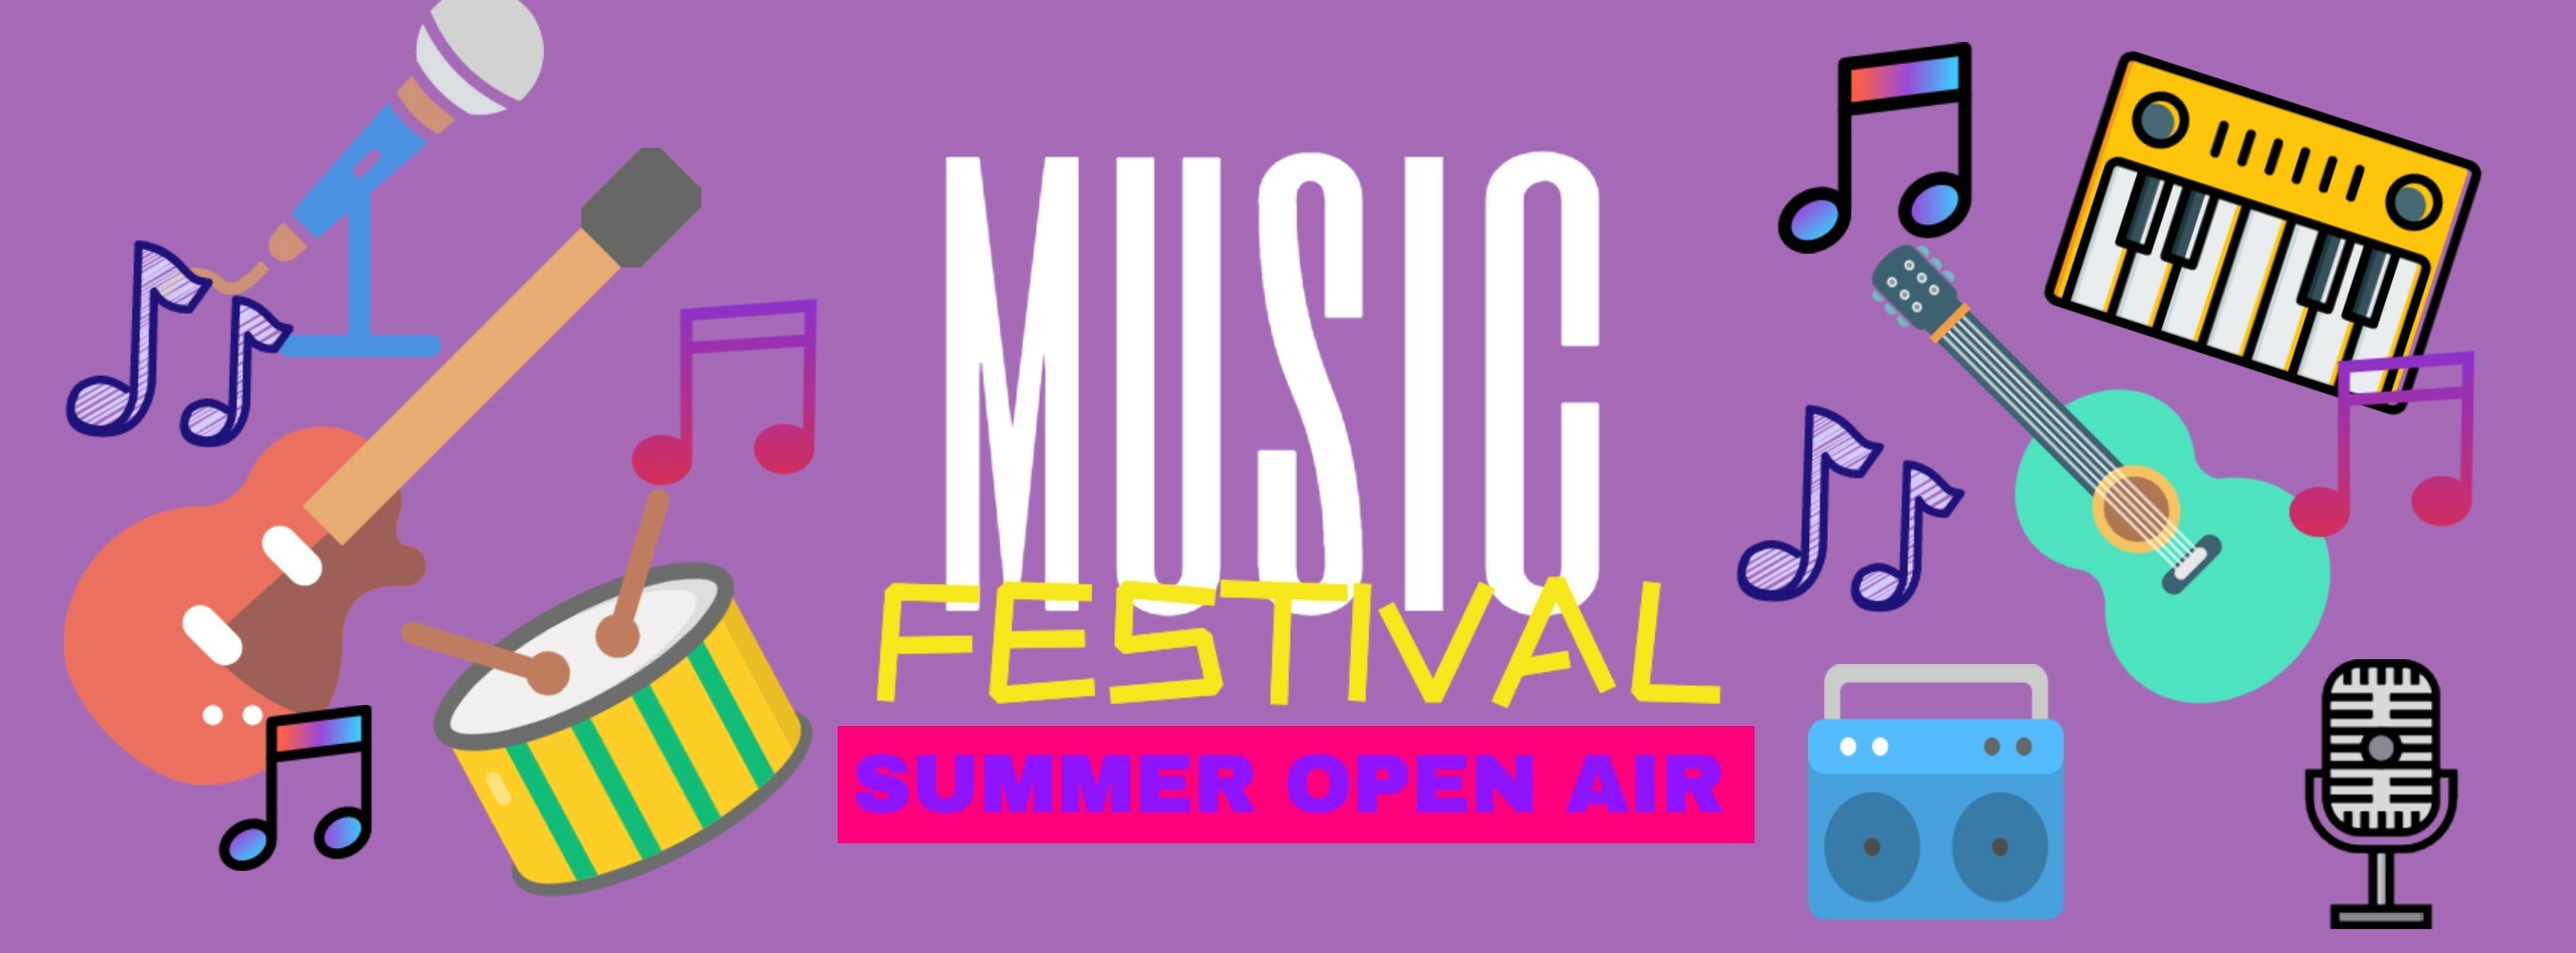 Music Festival template